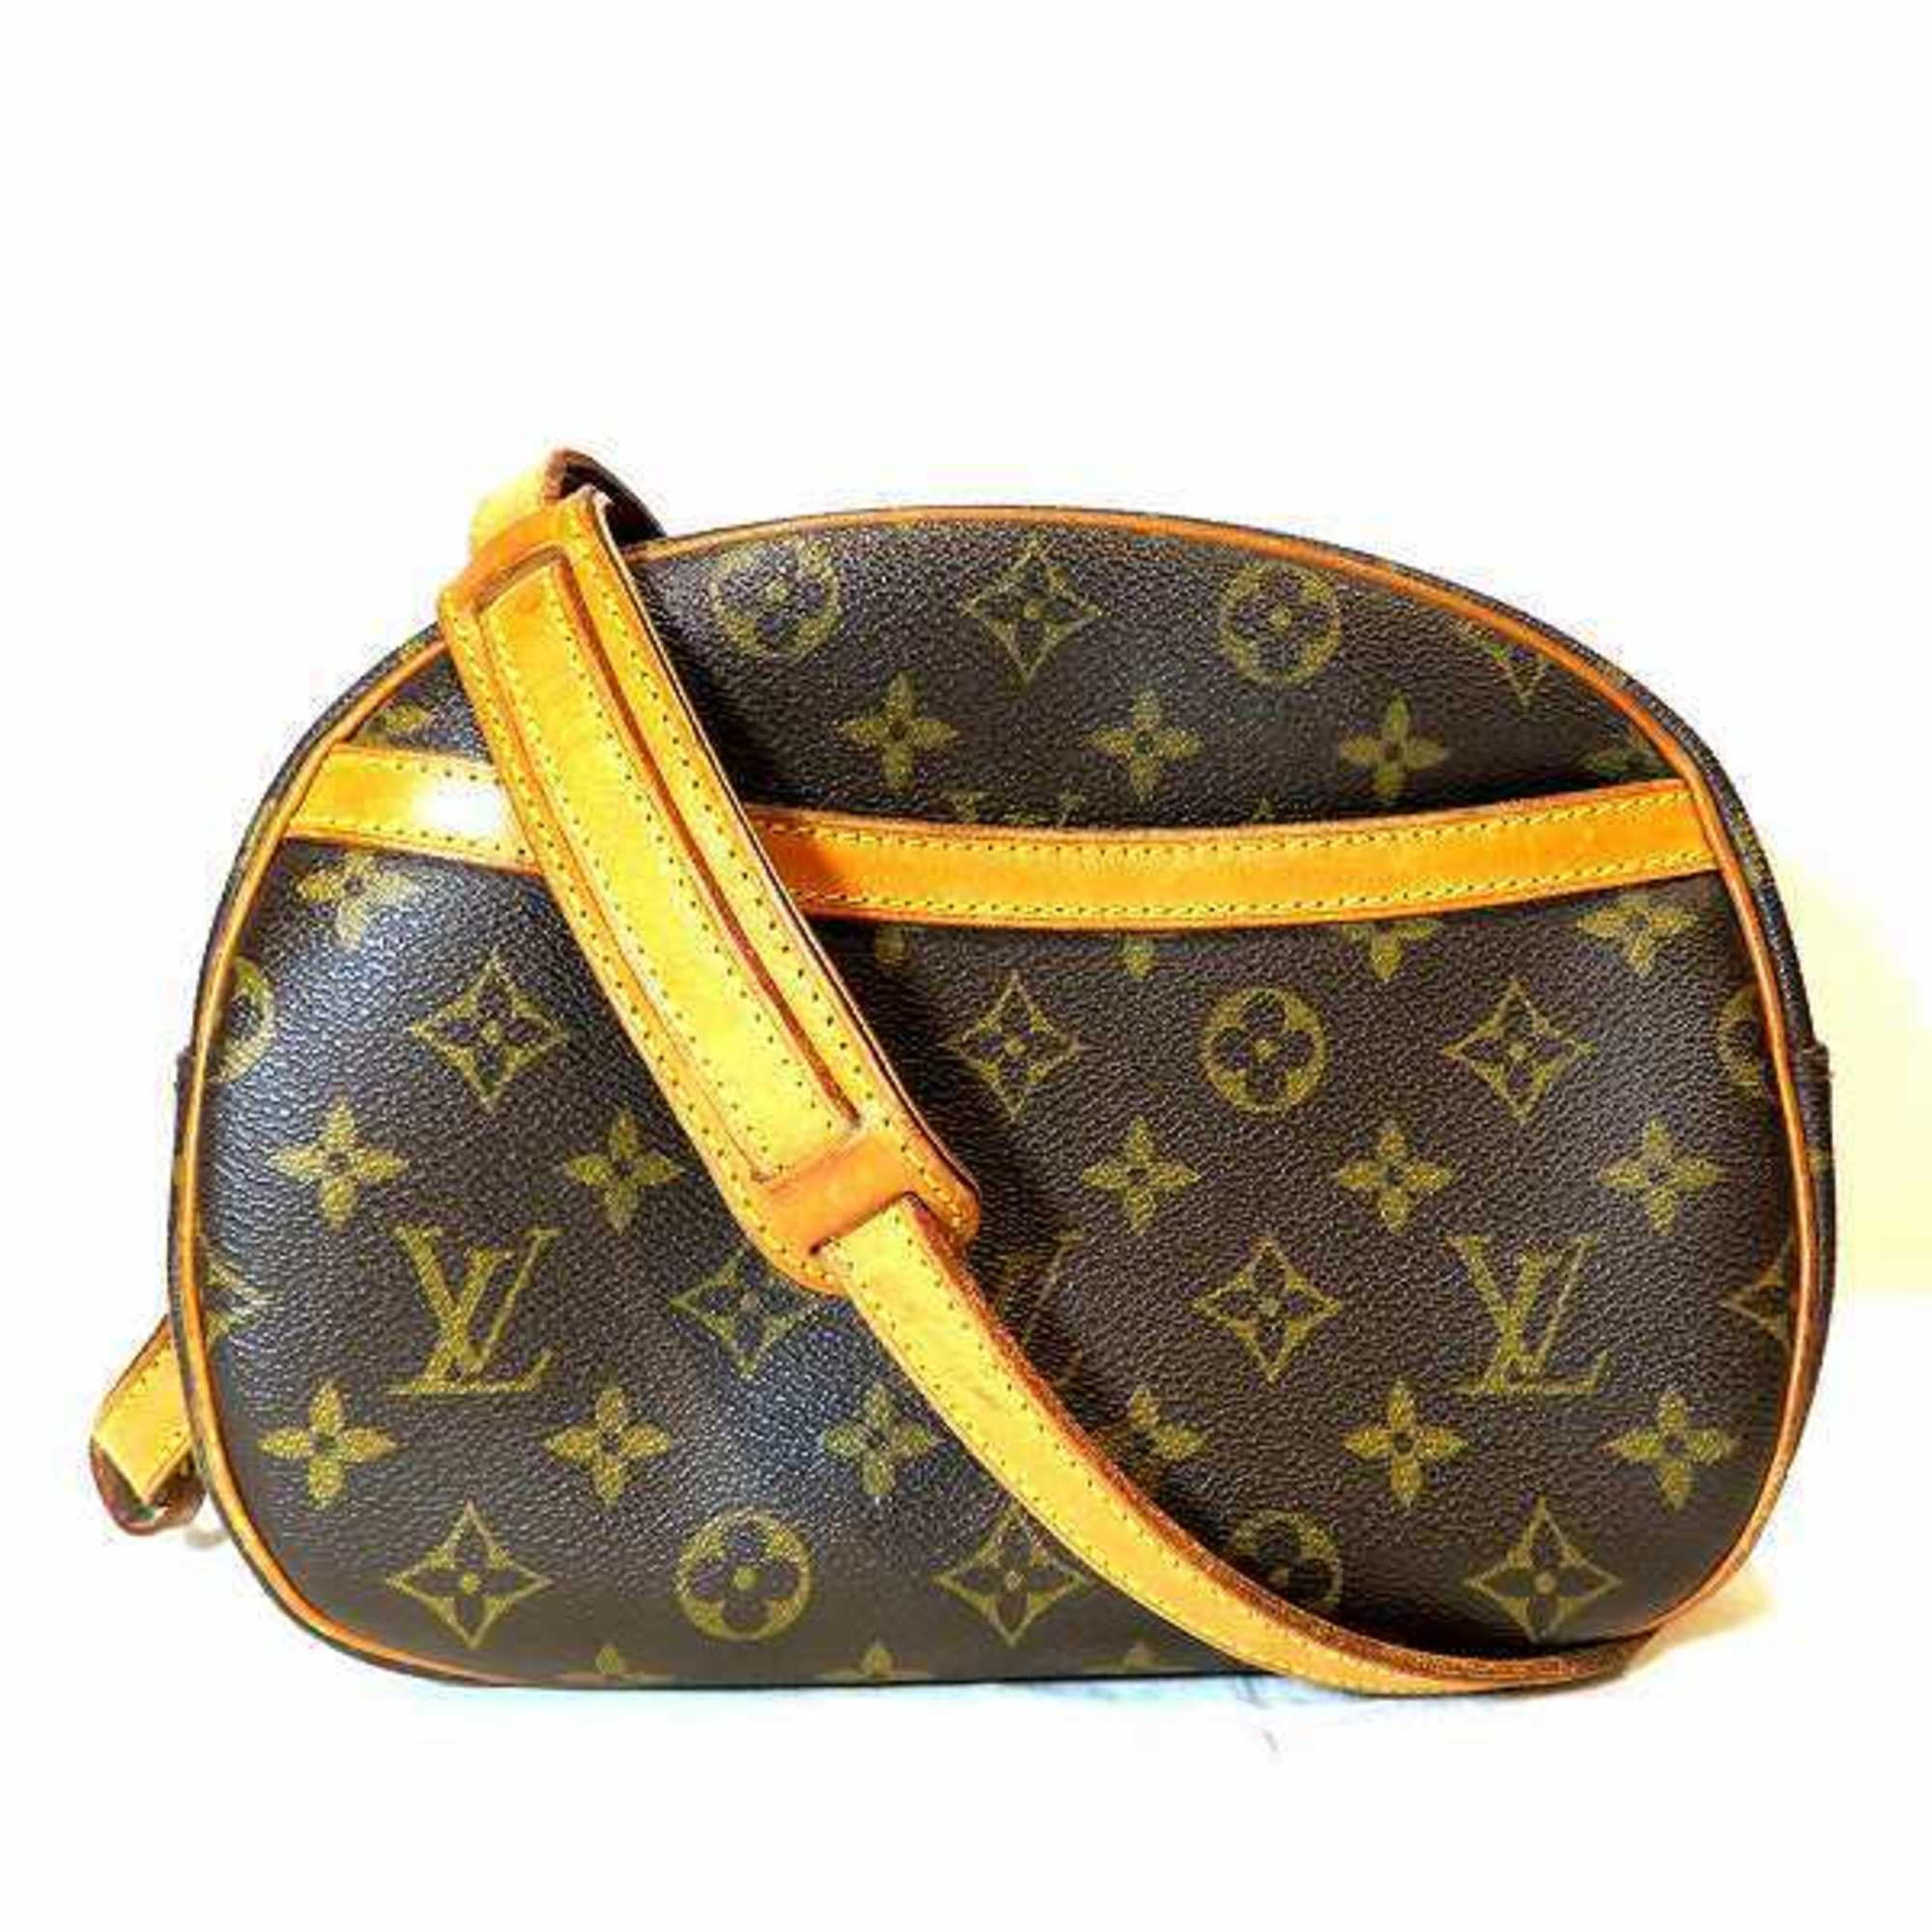 Louis Vuitton - Authenticated Blois Handbag - Leather Brown for Women, Good Condition